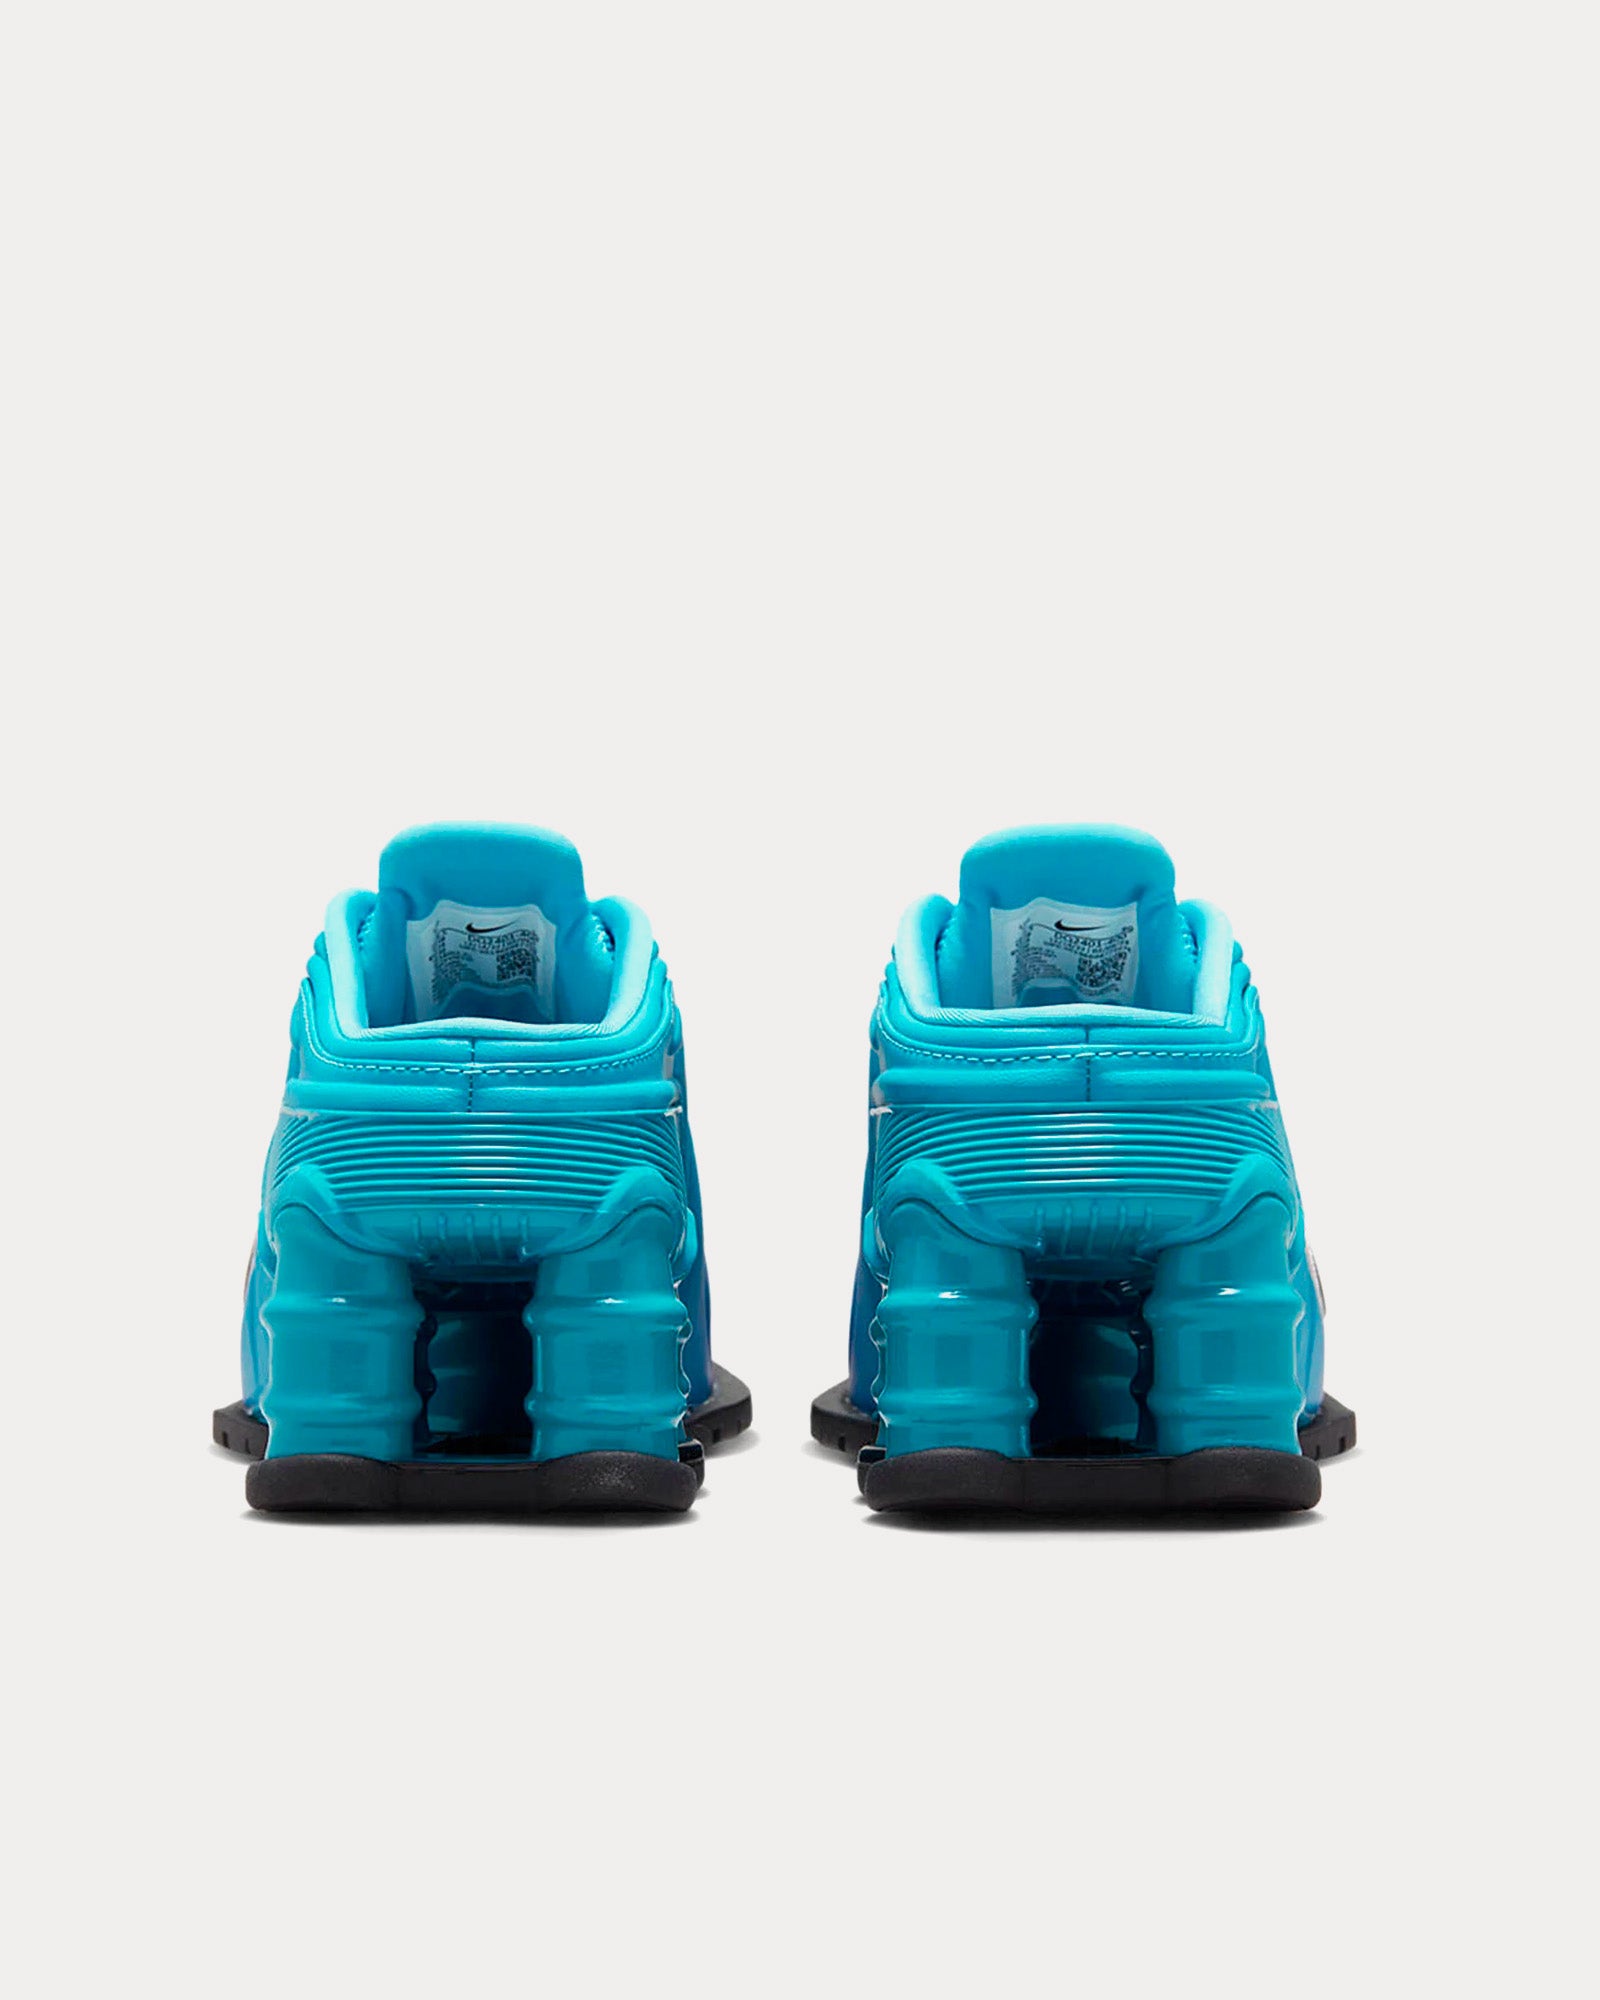 Nike x Martine Rose - Shox MR4 Scuba Blue Low Top Sneakers